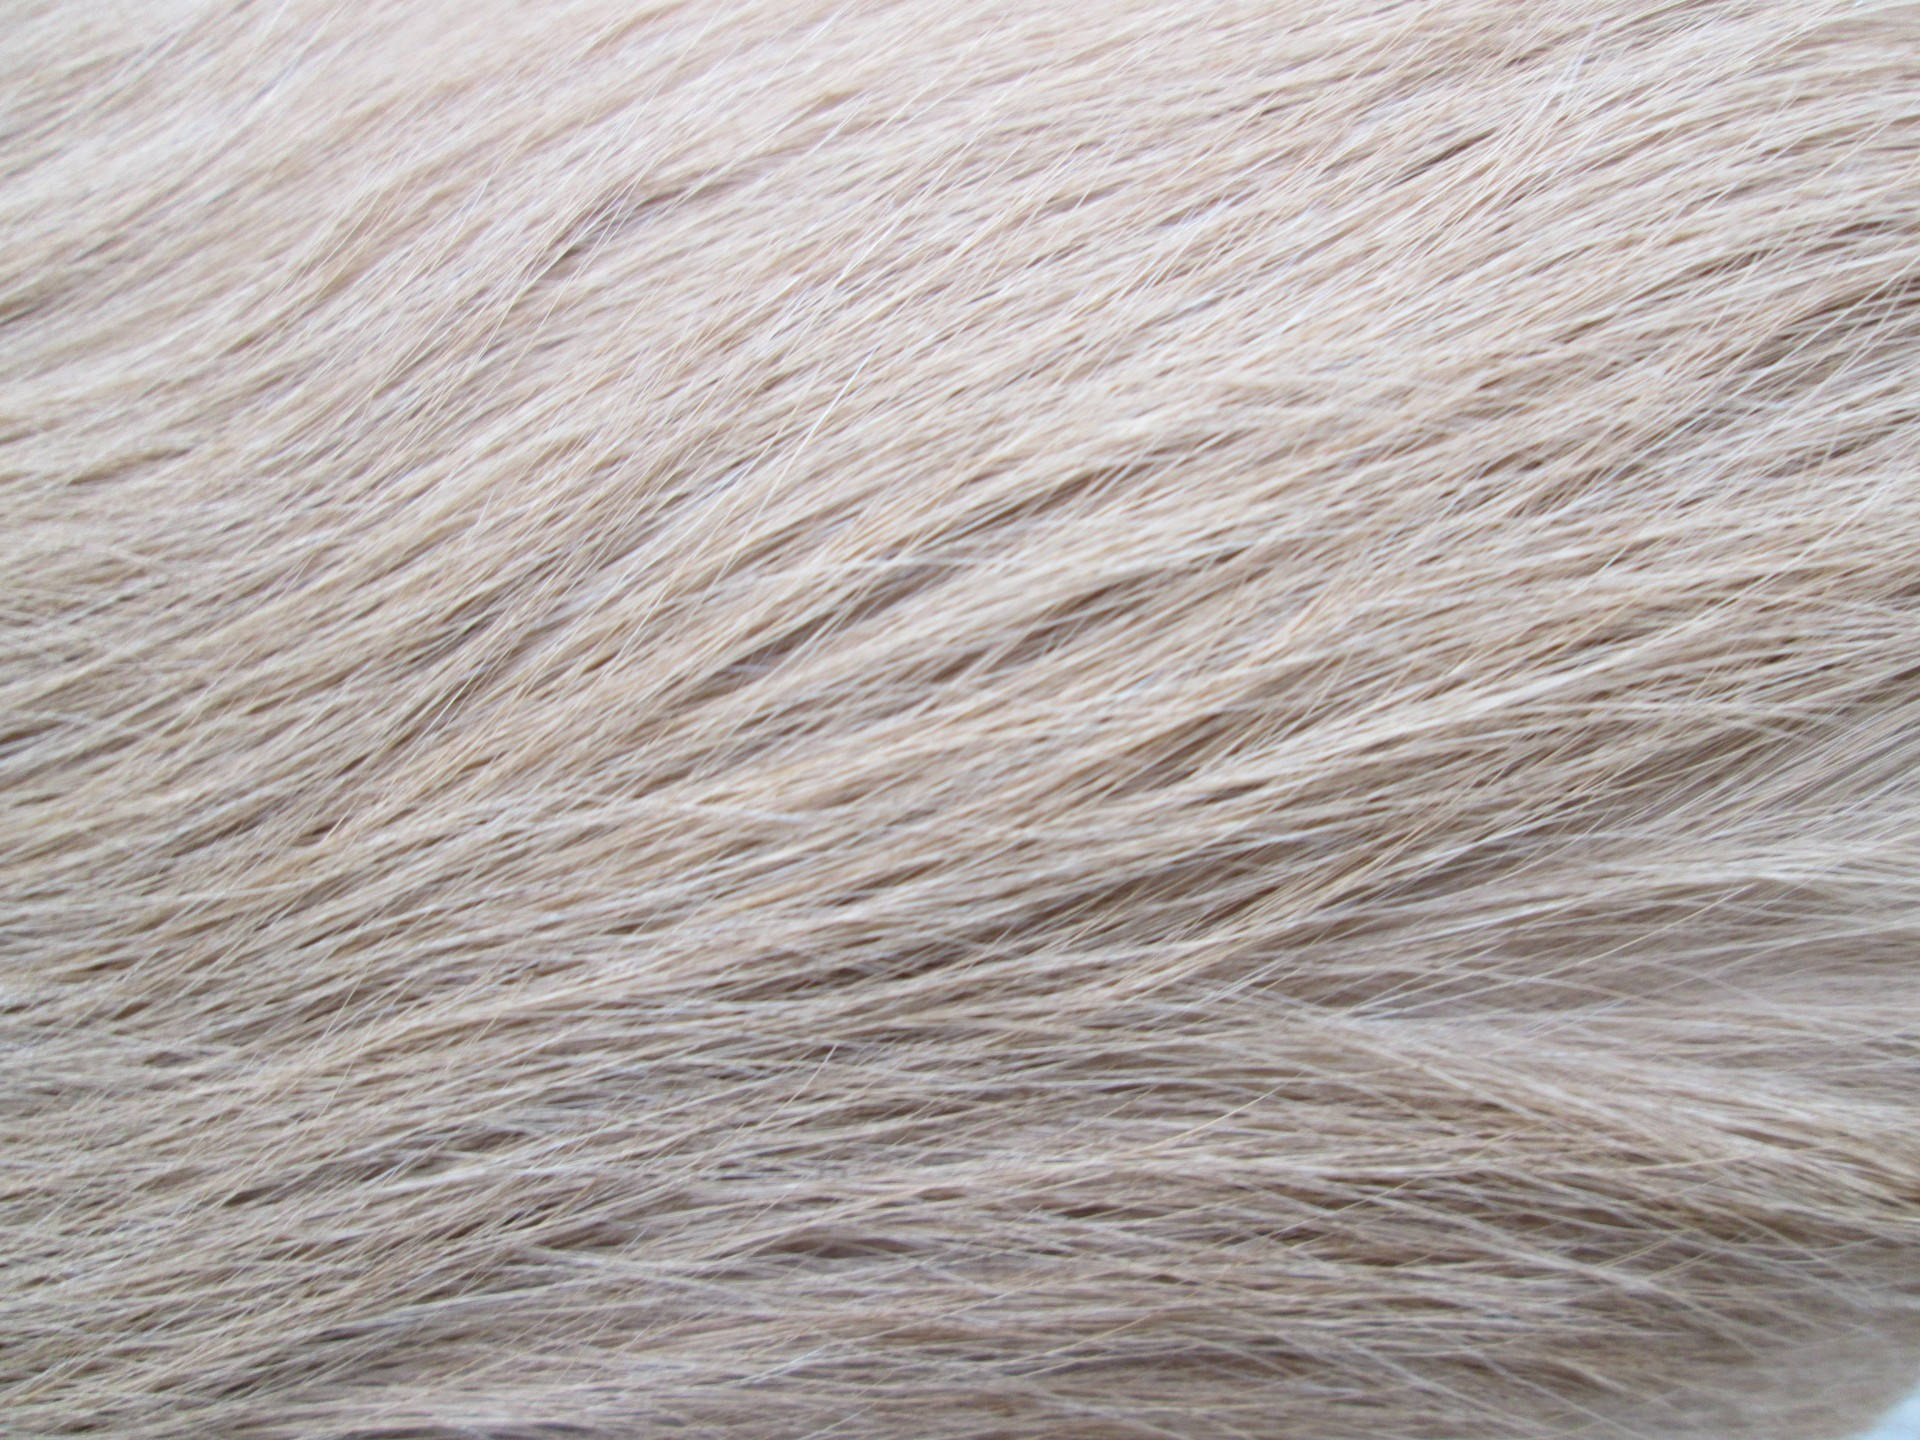 Pale White Animal Fur Background